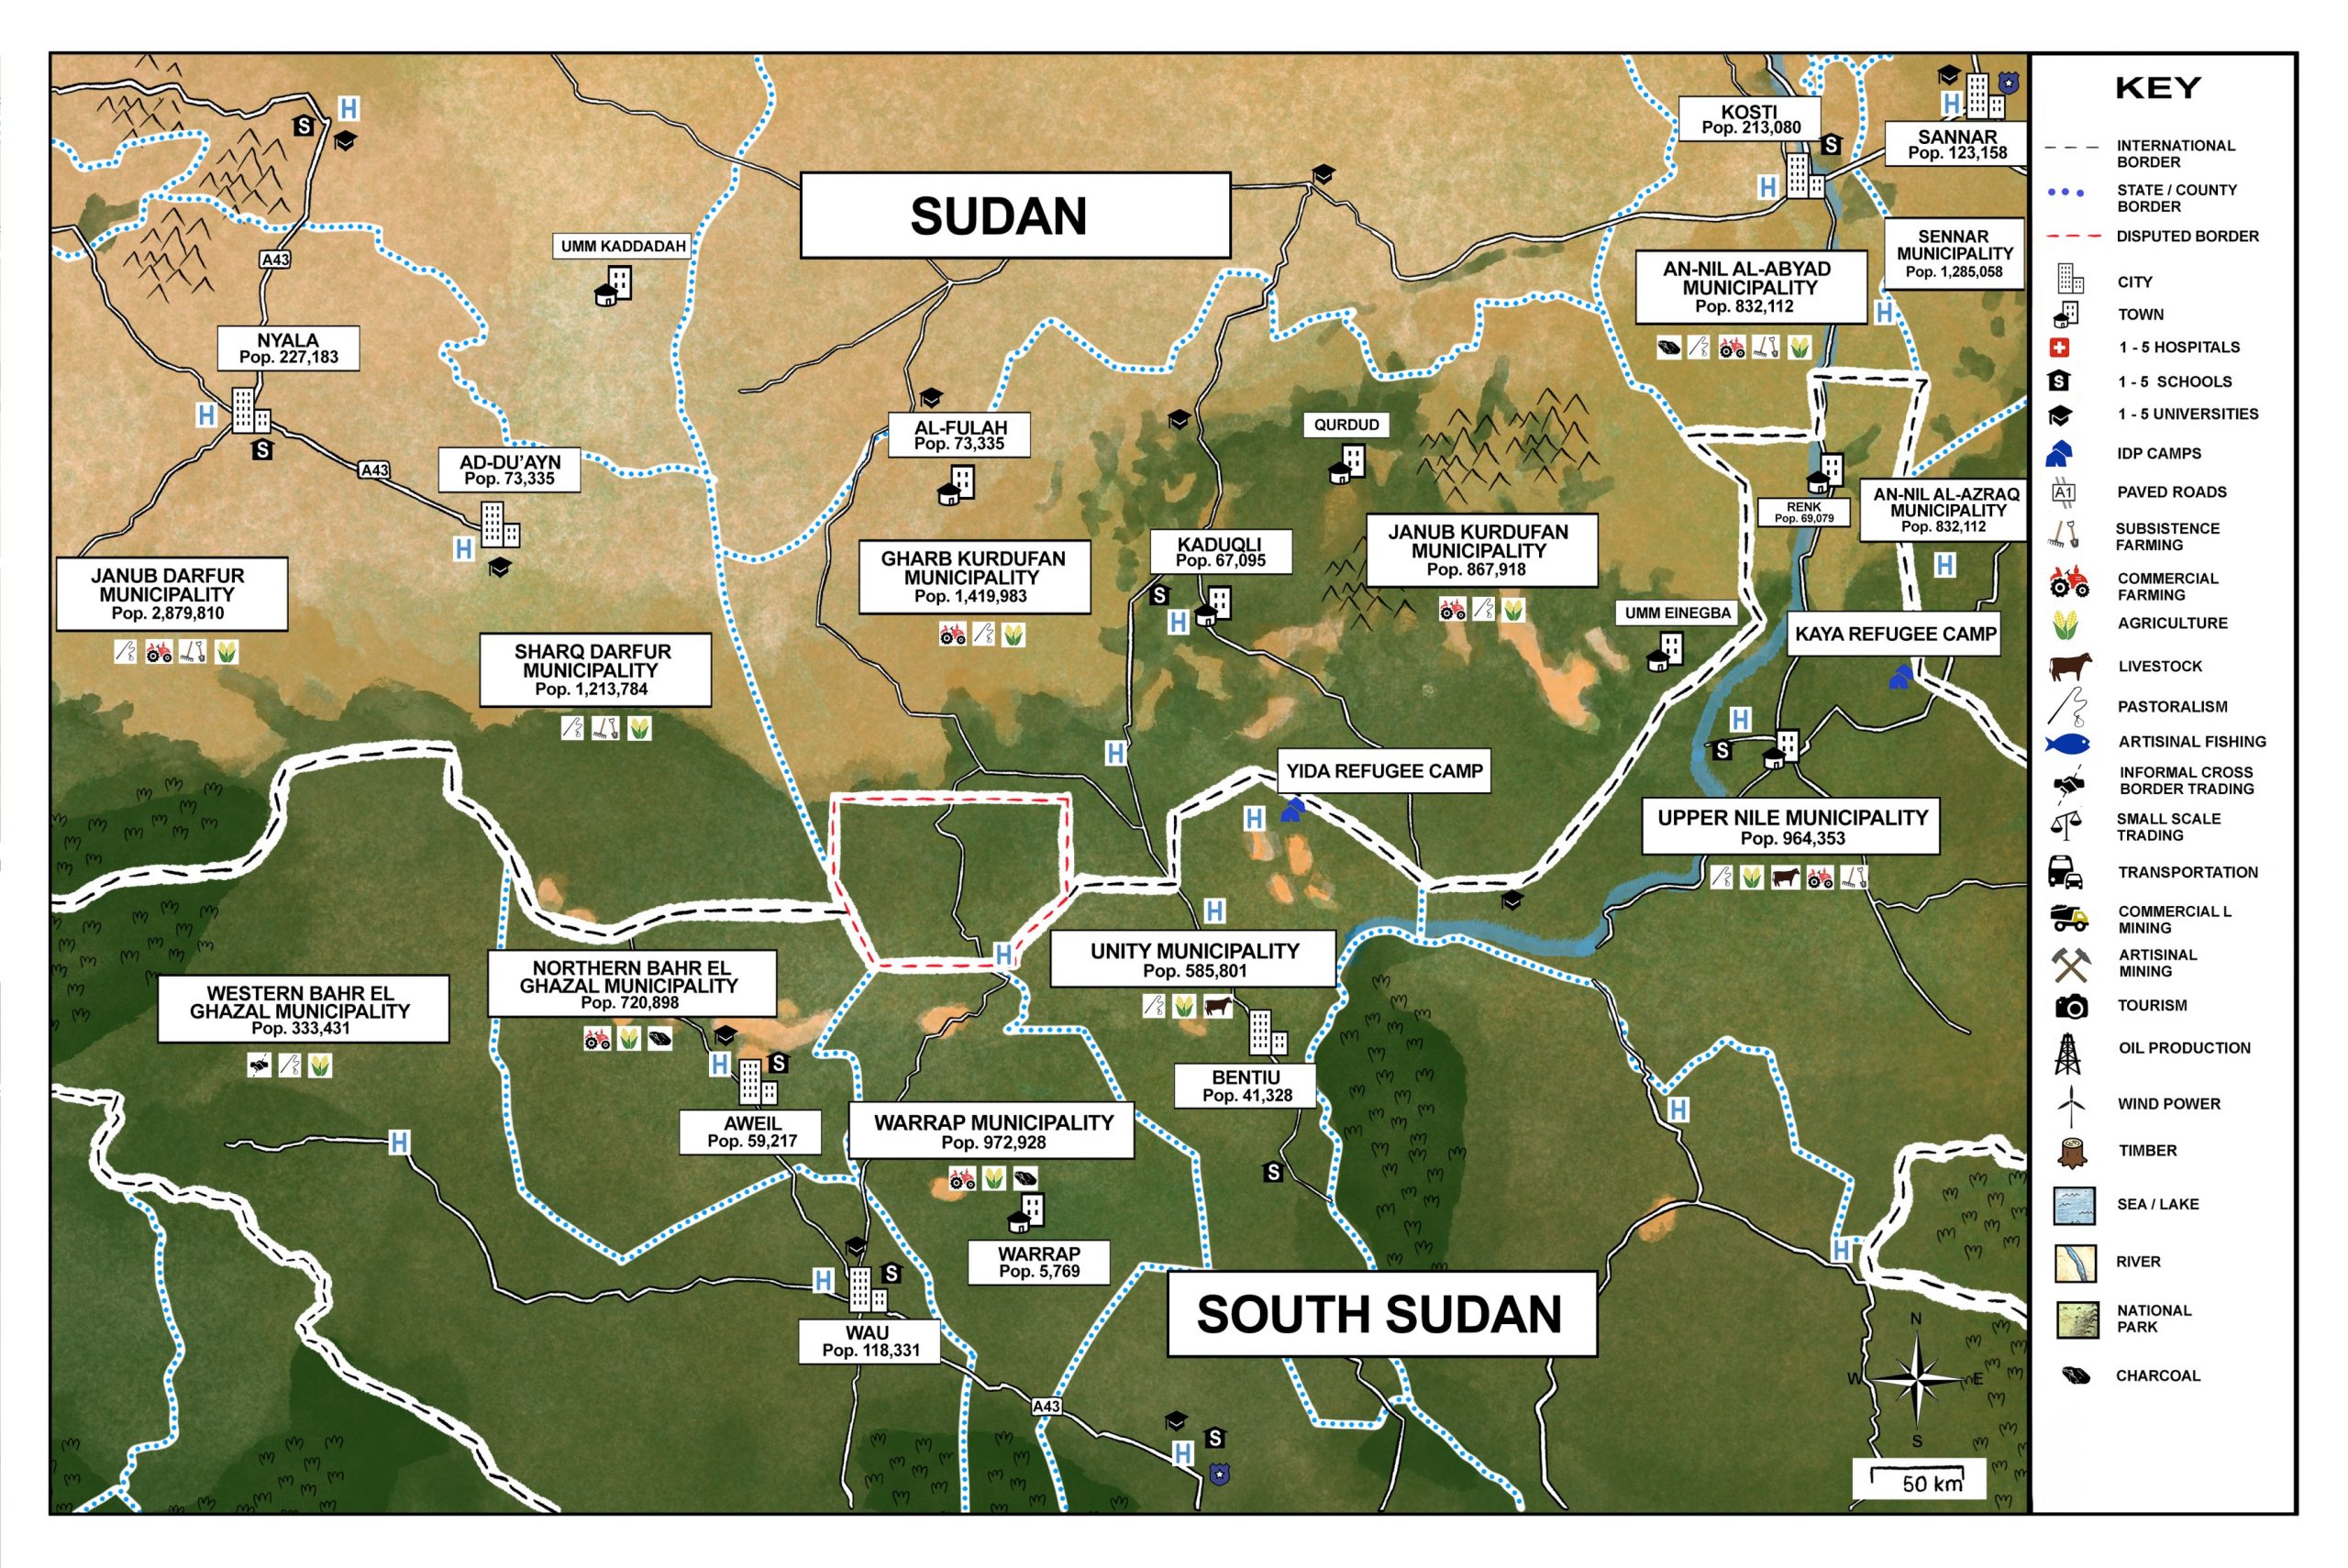 SOUTH SUDAN - SUDAN_illustration